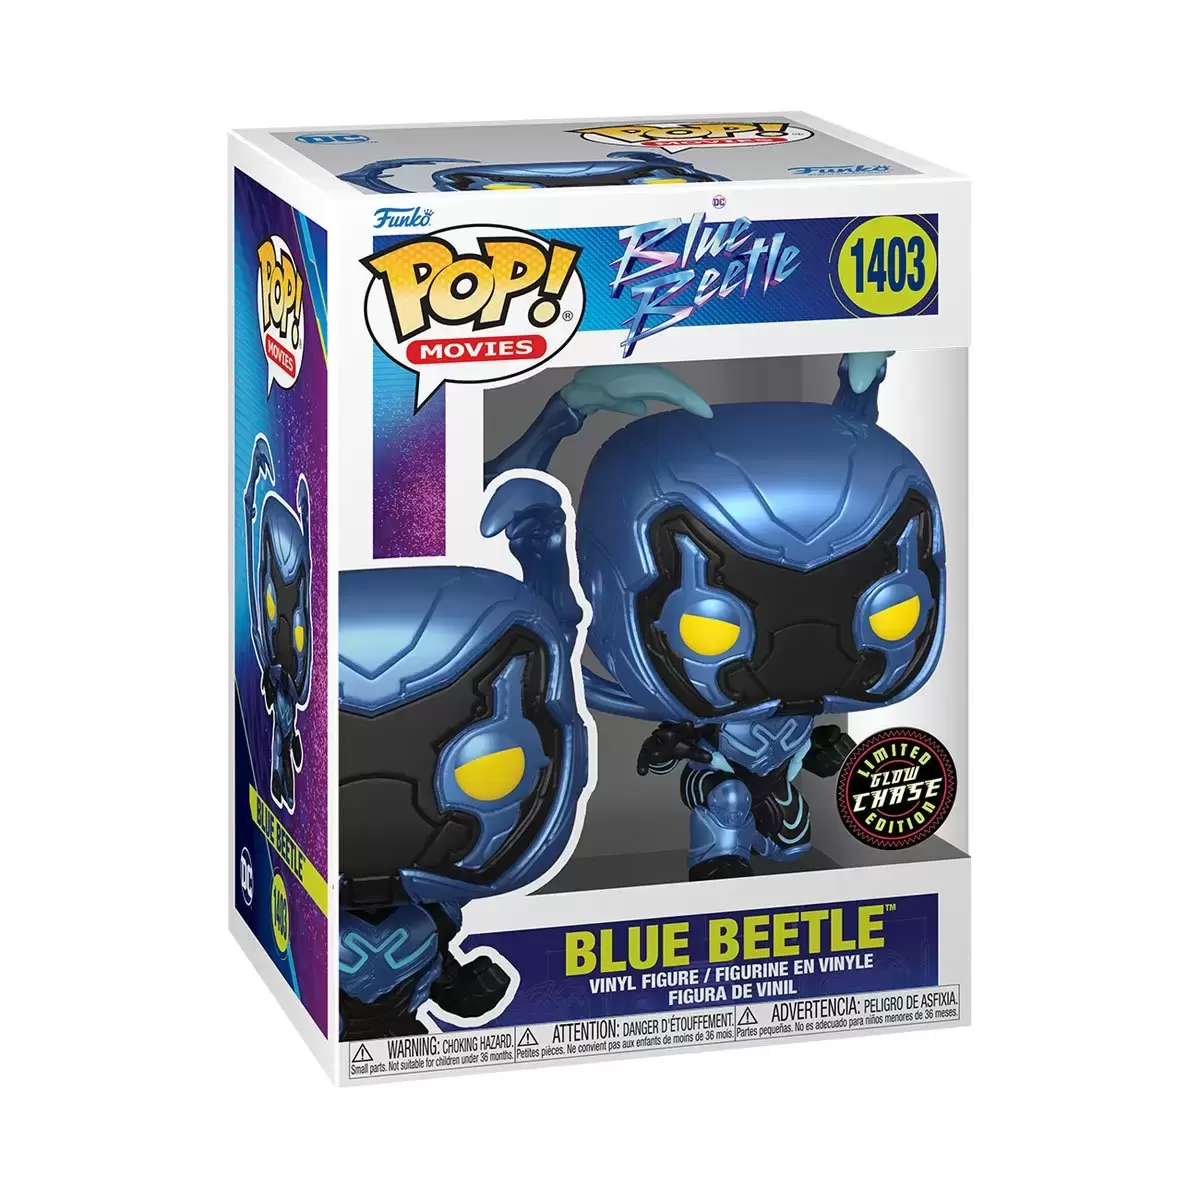 POP! Movies - Blue Beetle - Blue Beetle GITD